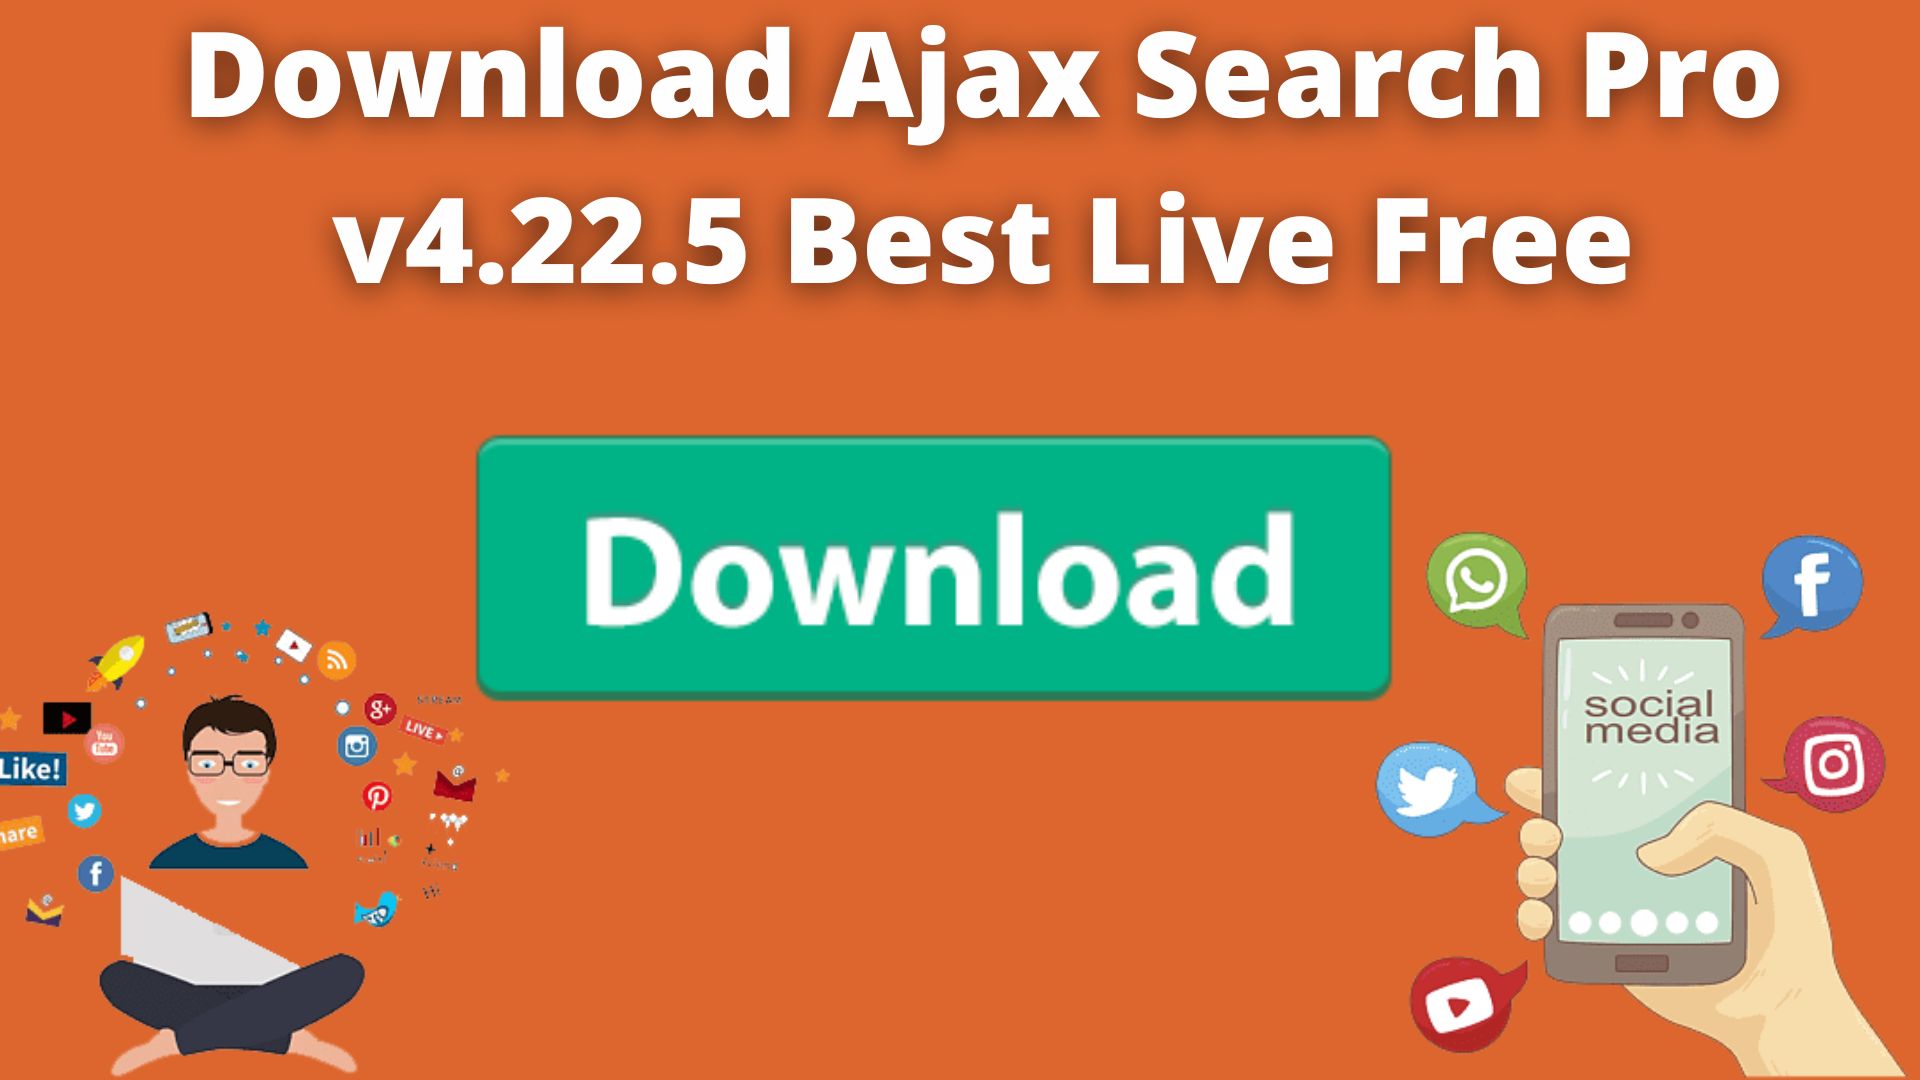 Download Ajax Search Pro V4.22.5 Best Live Free